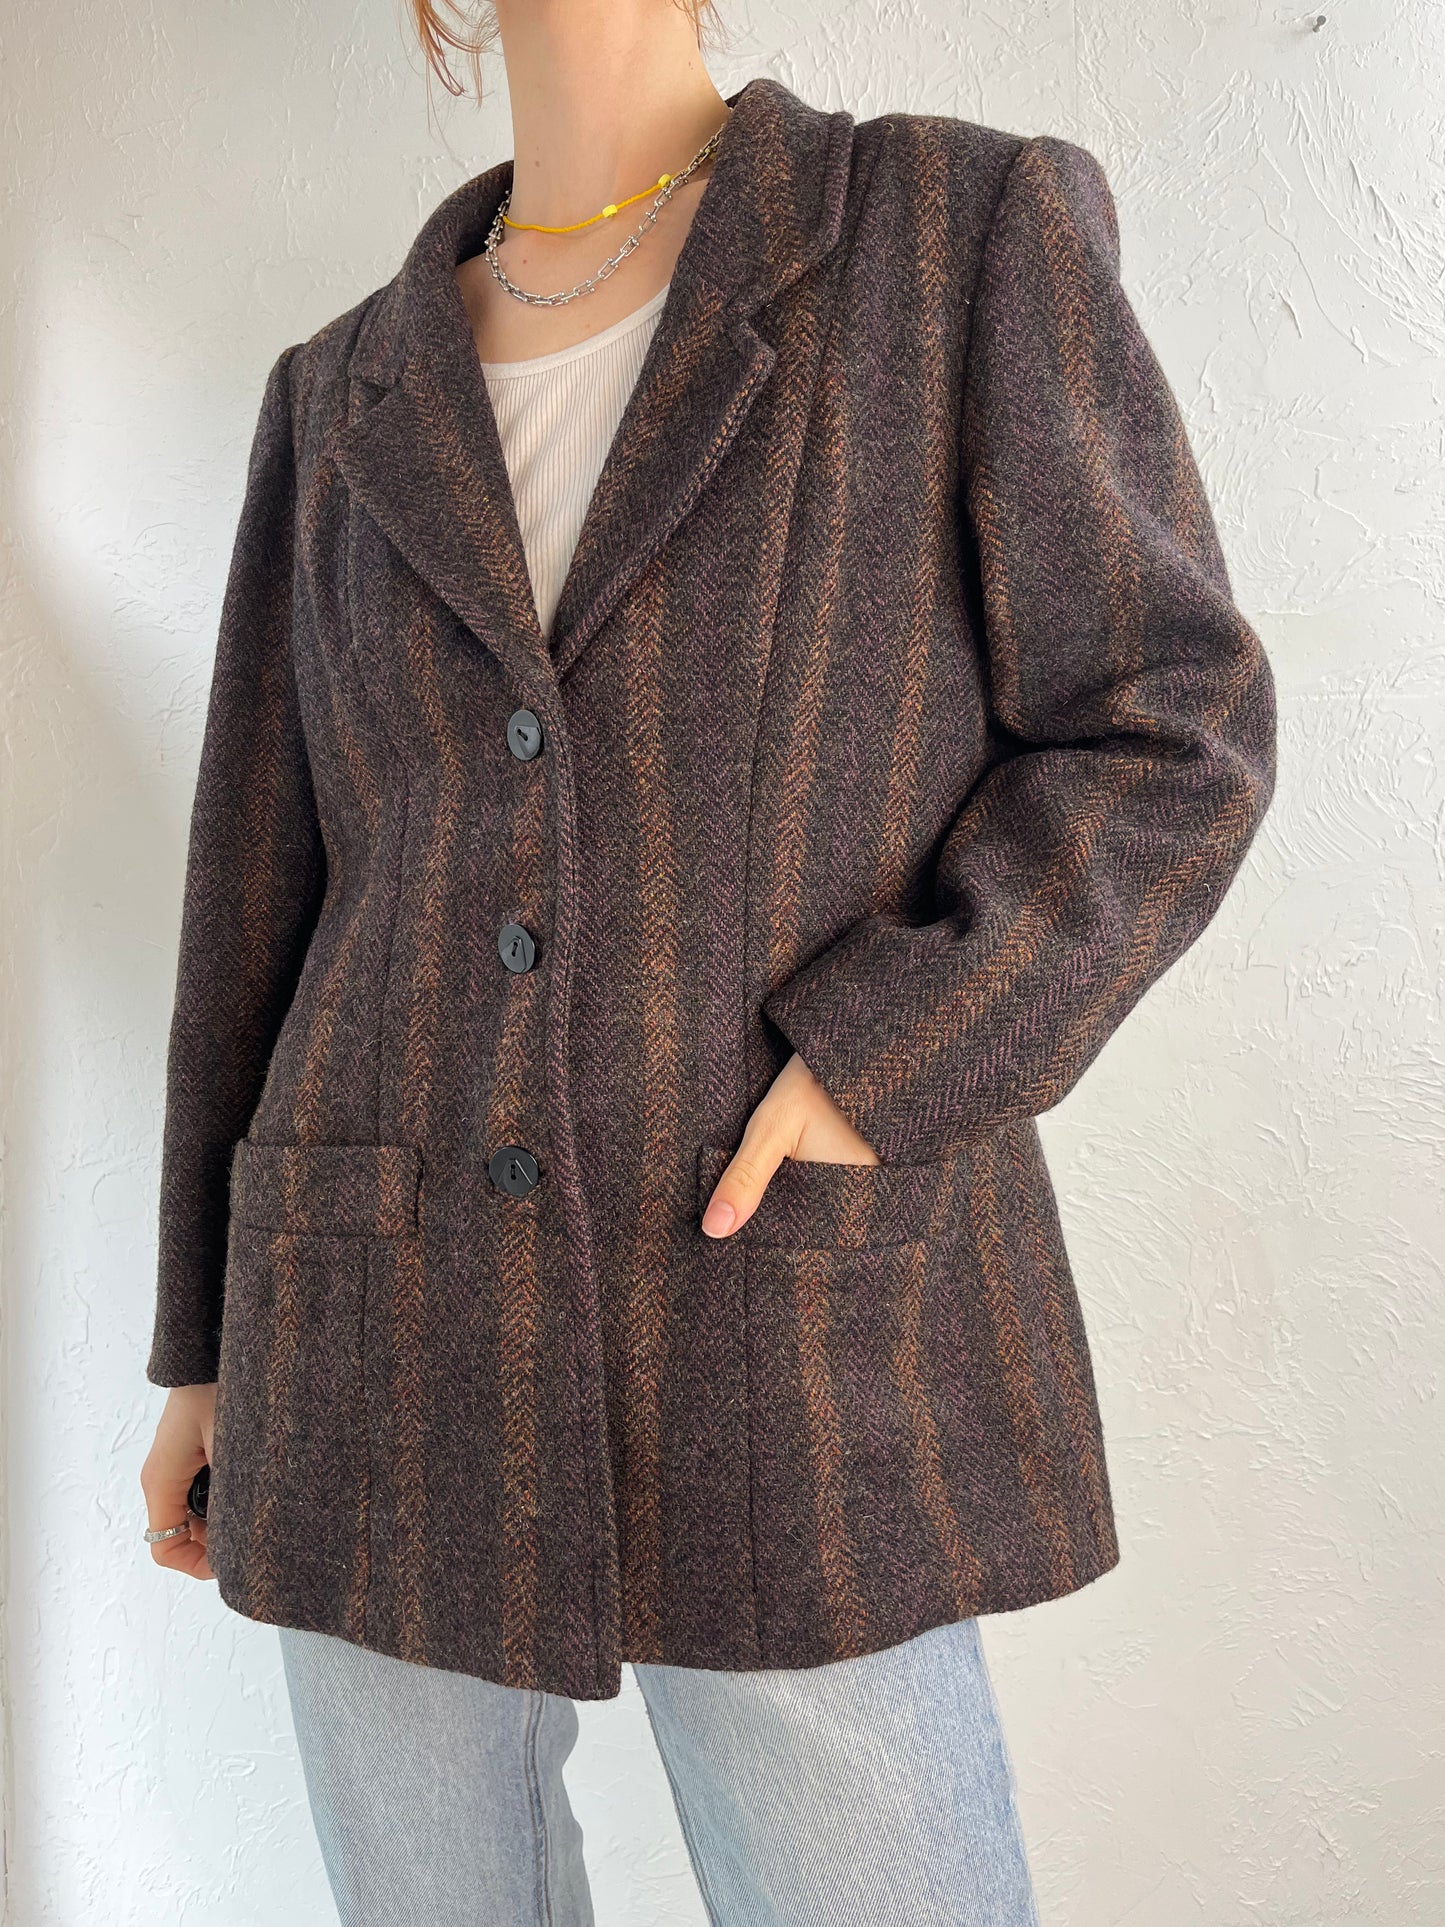 90s Herringbone Wool Jacket / Medium - Large